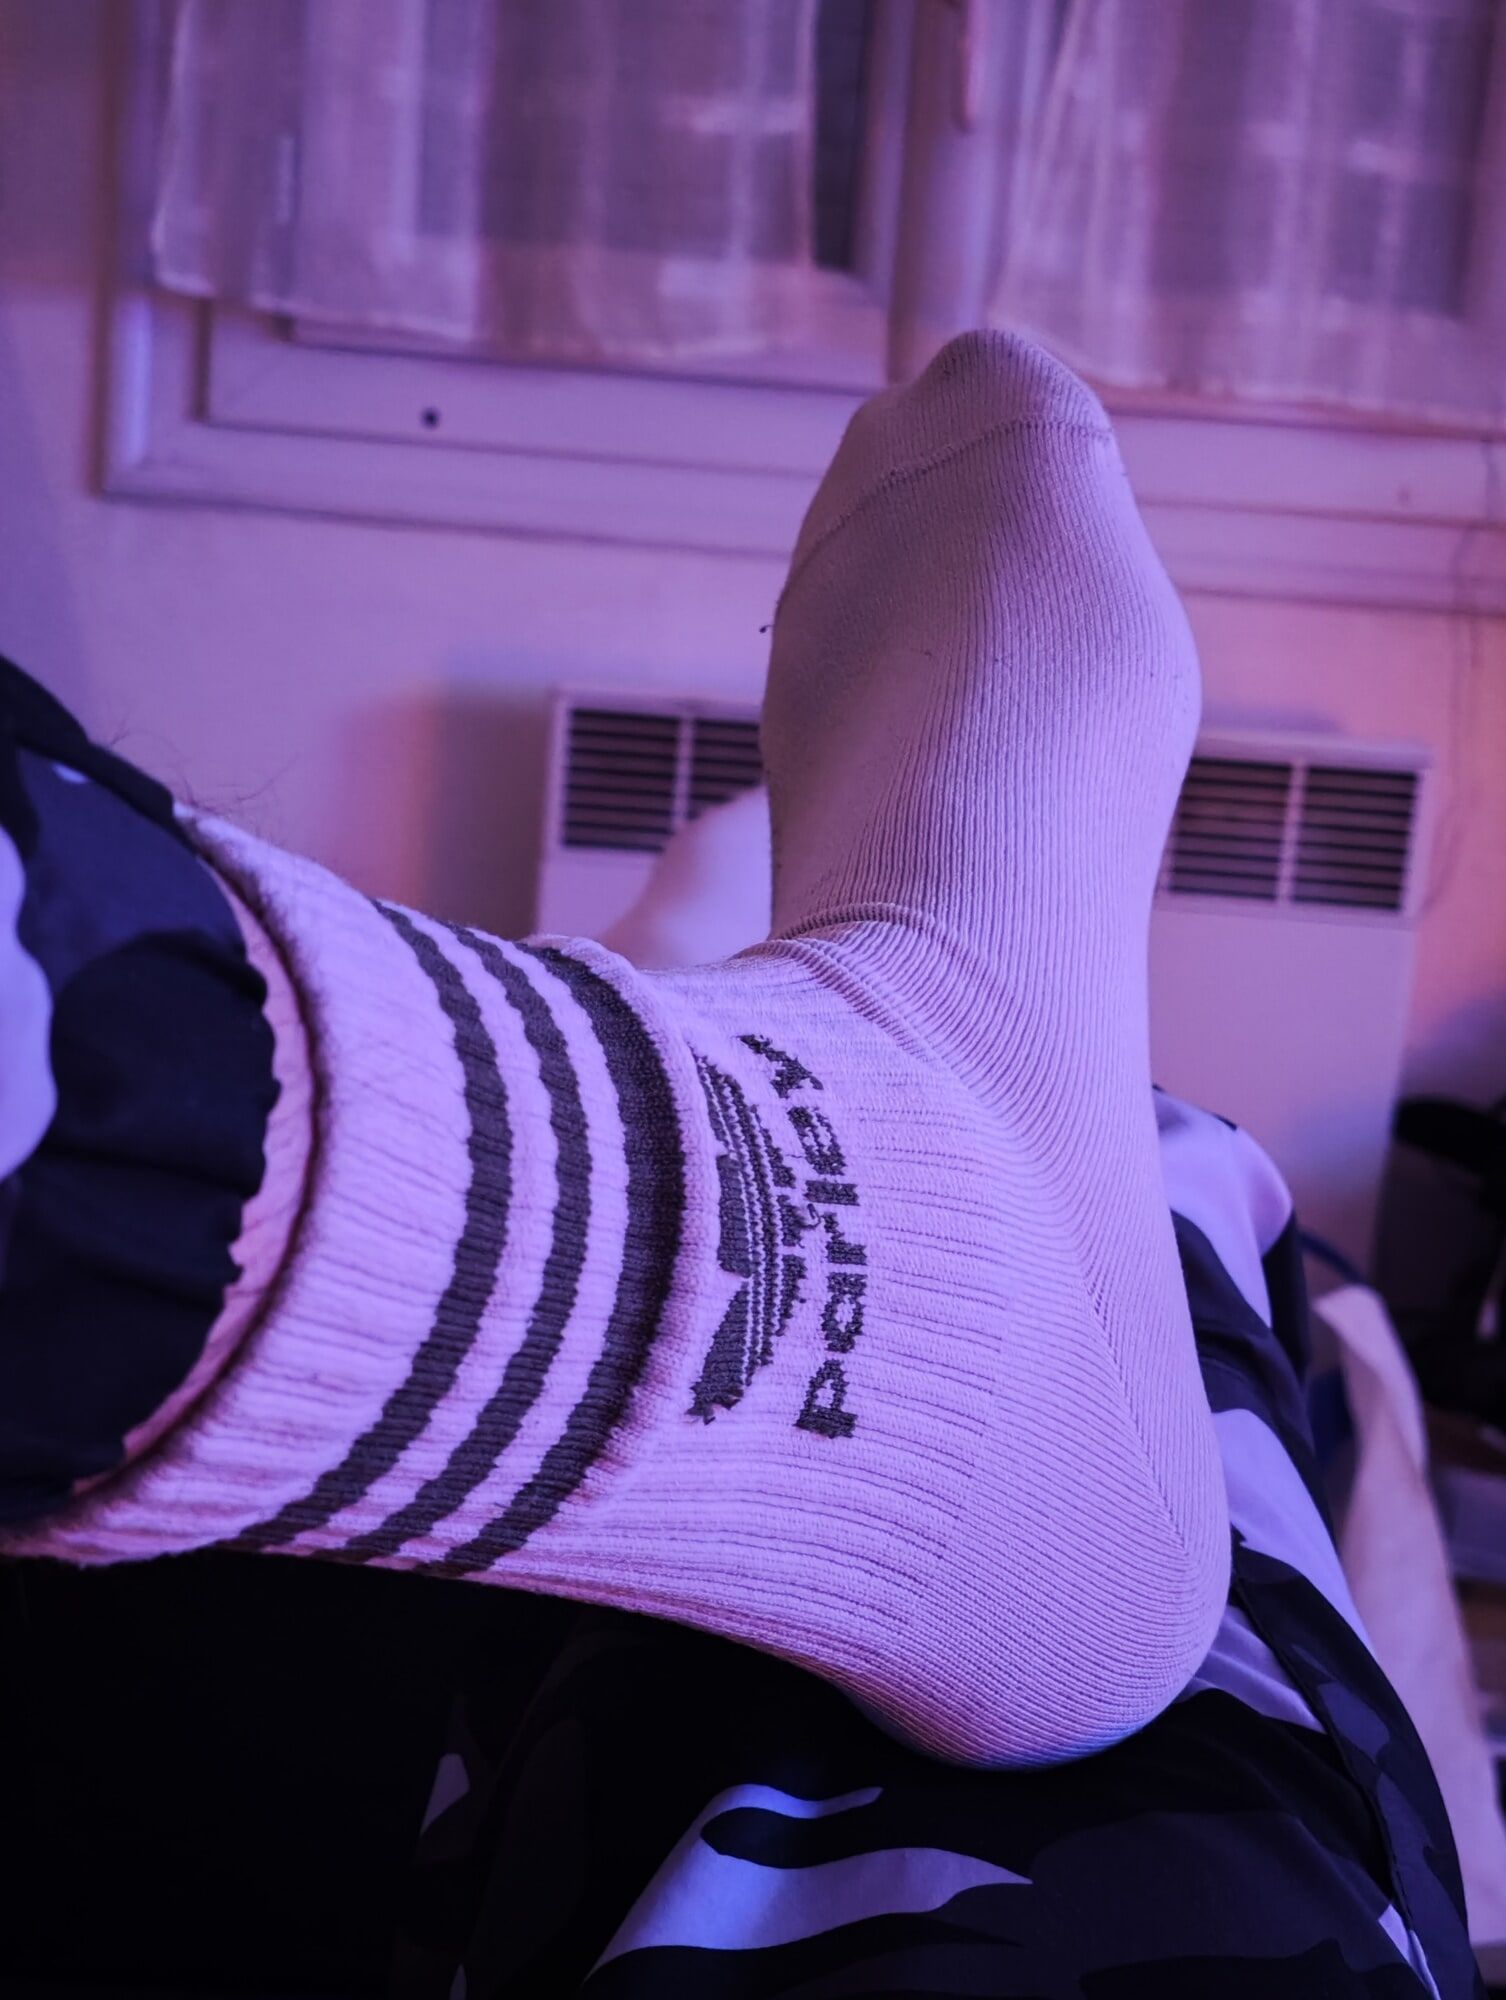 My socks and feet #5